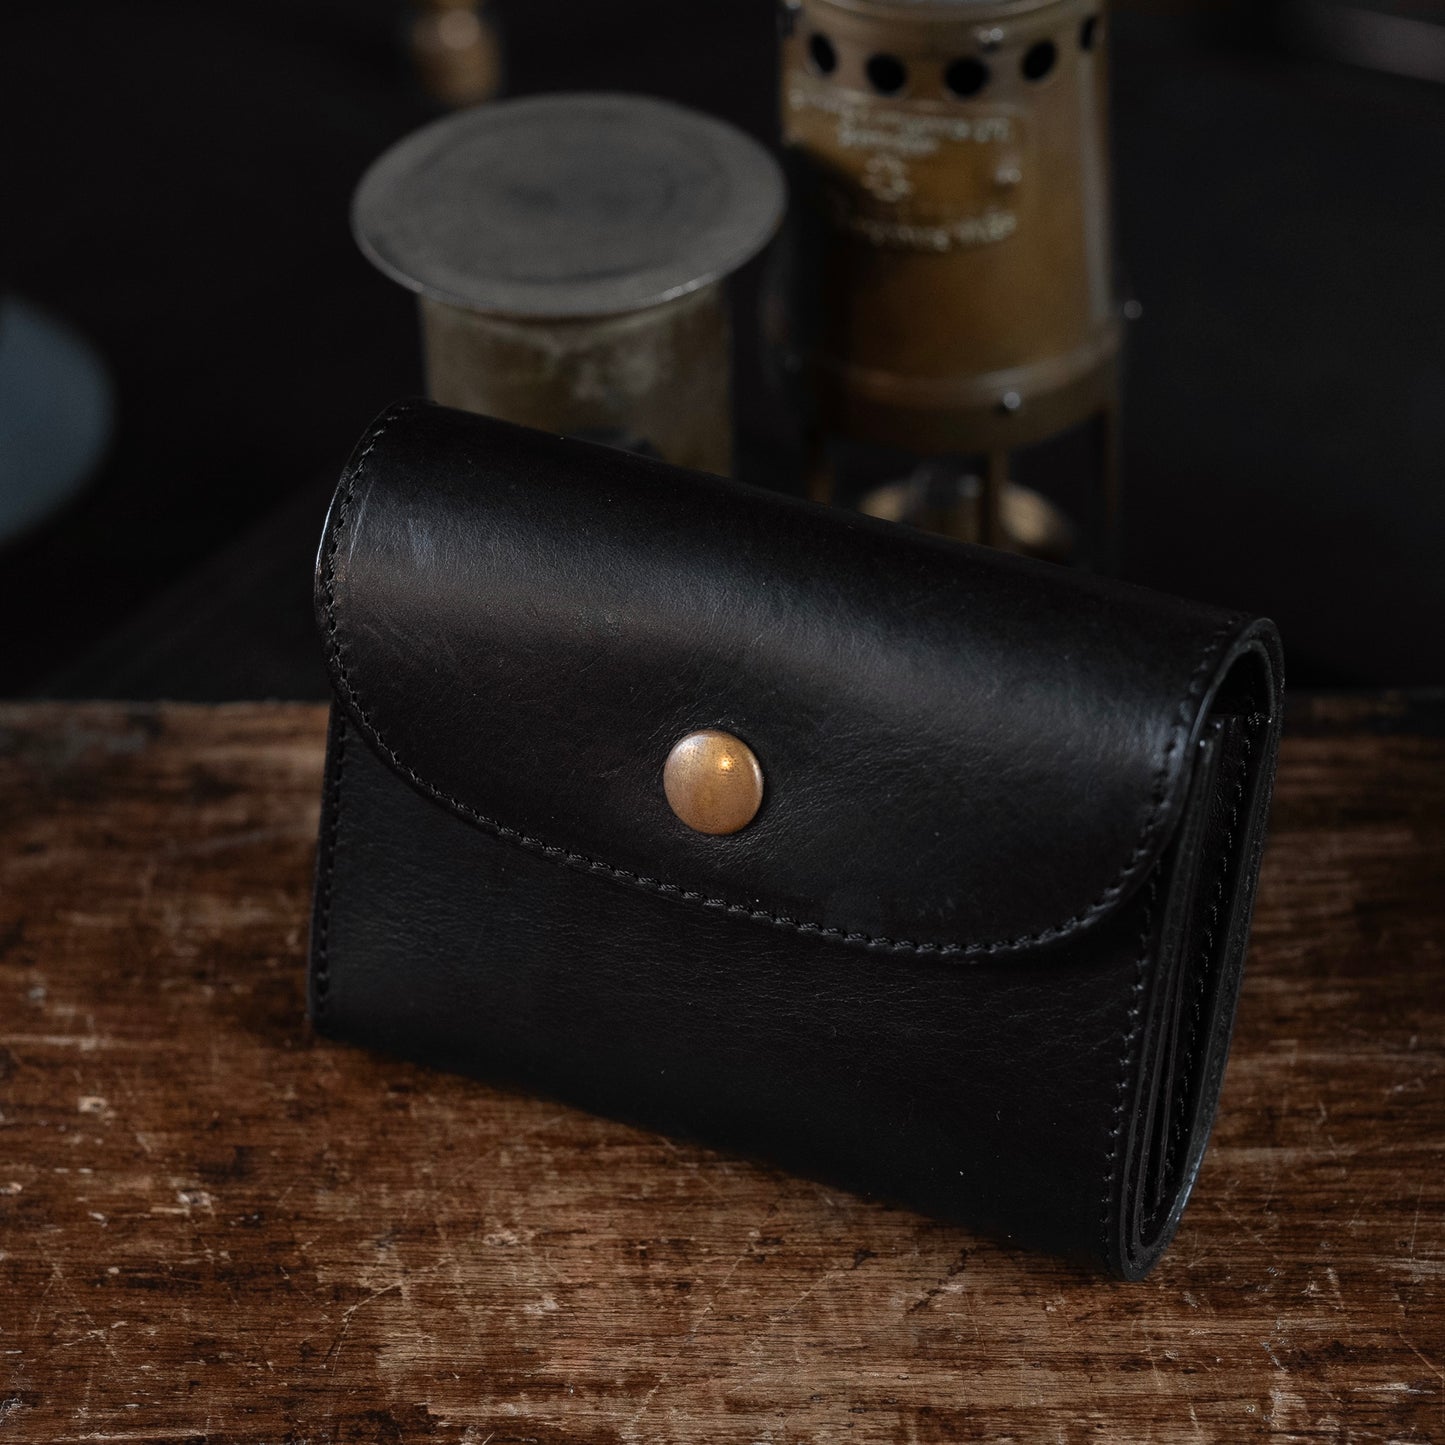 Tri-fold wallet